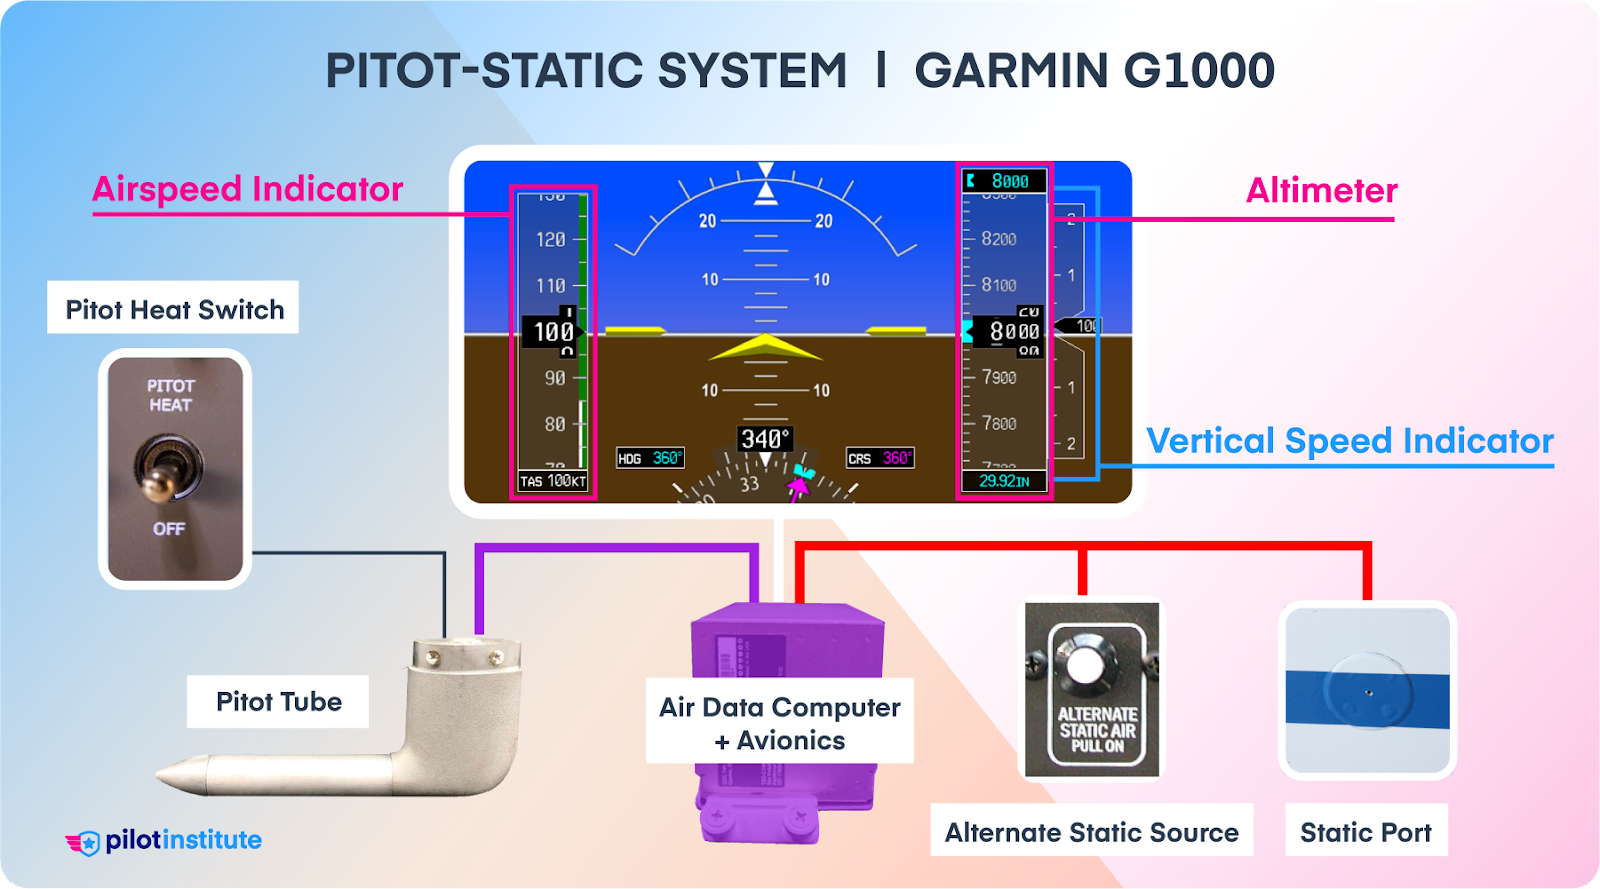 Diagram of the Garmin G1000 pitot-static system.